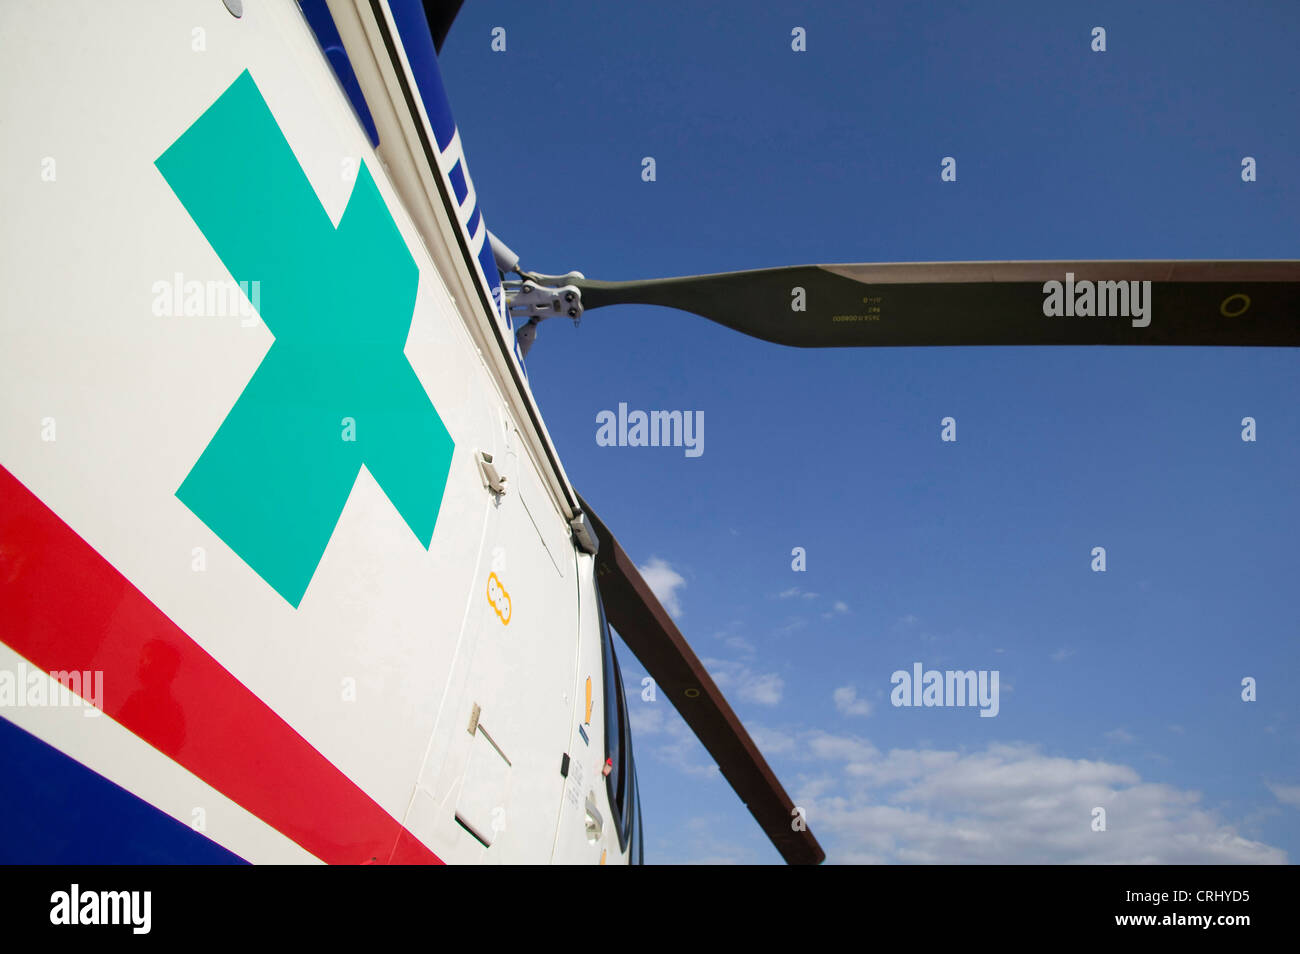 The air ambulance service at the Samsung Medical Center, Seoul, South Korea. Stock Photo